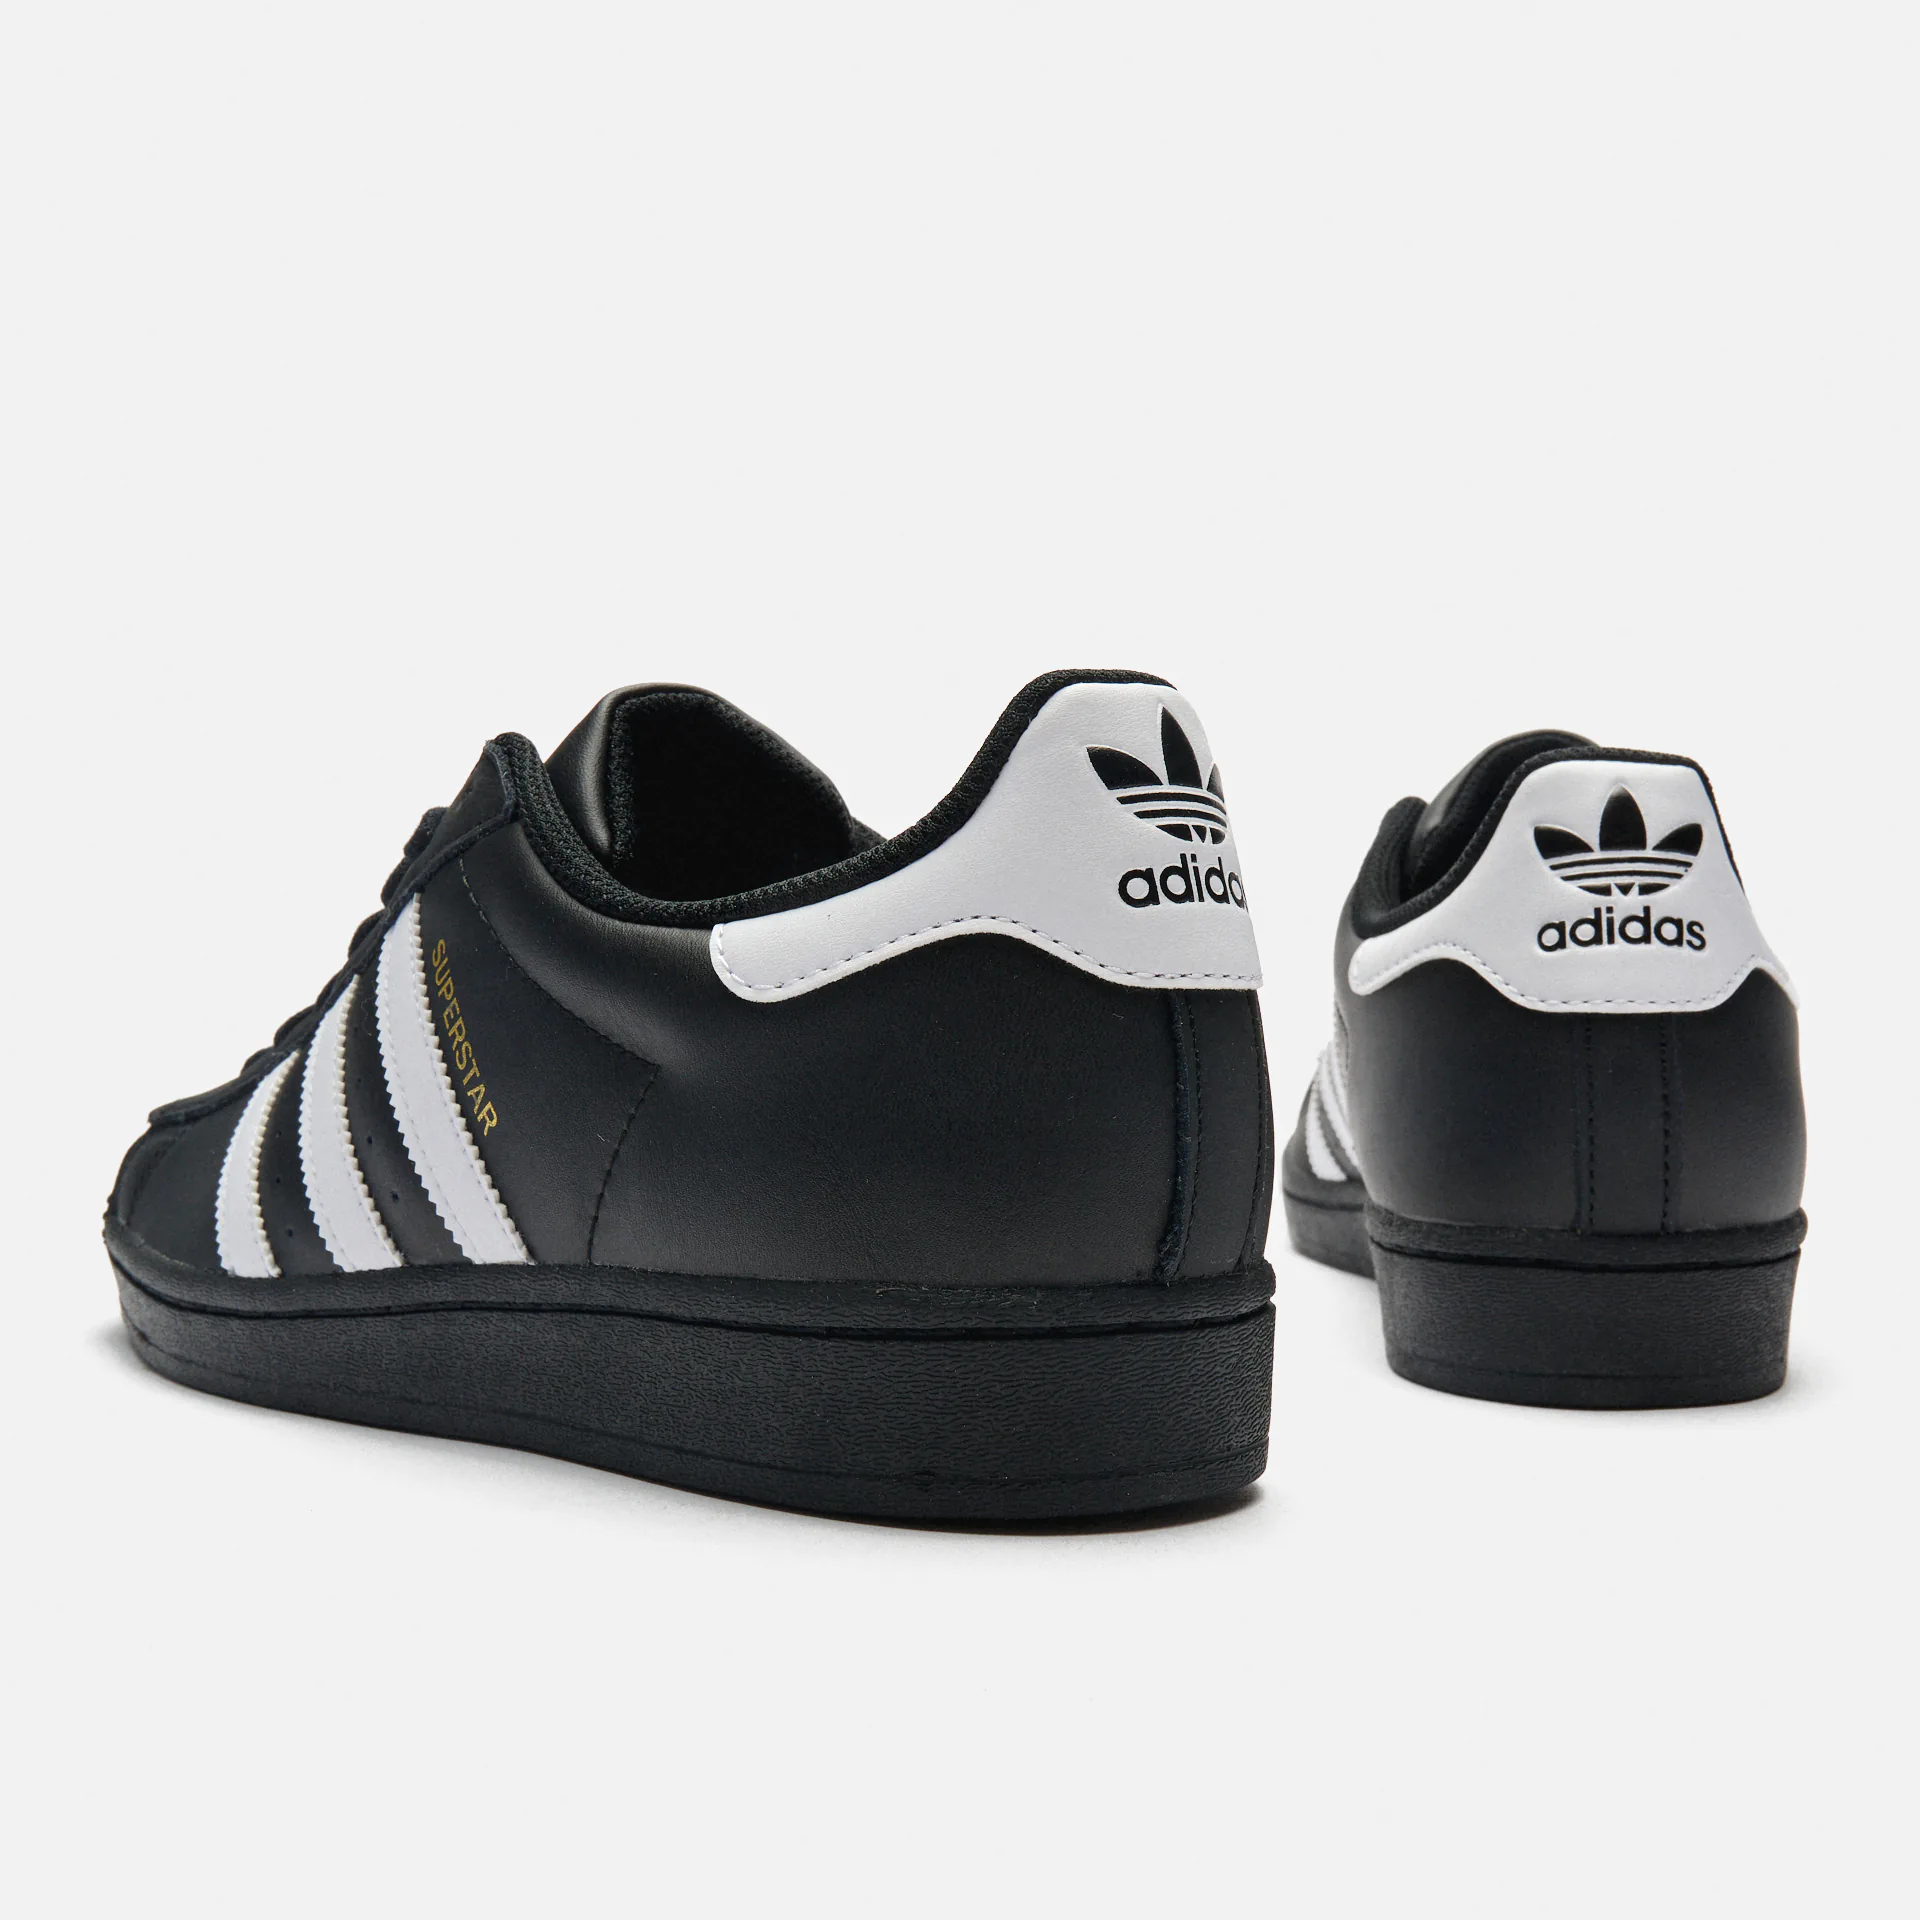 adidas Originals Superstar Sneaker Black/Cloud White/Core Core Black